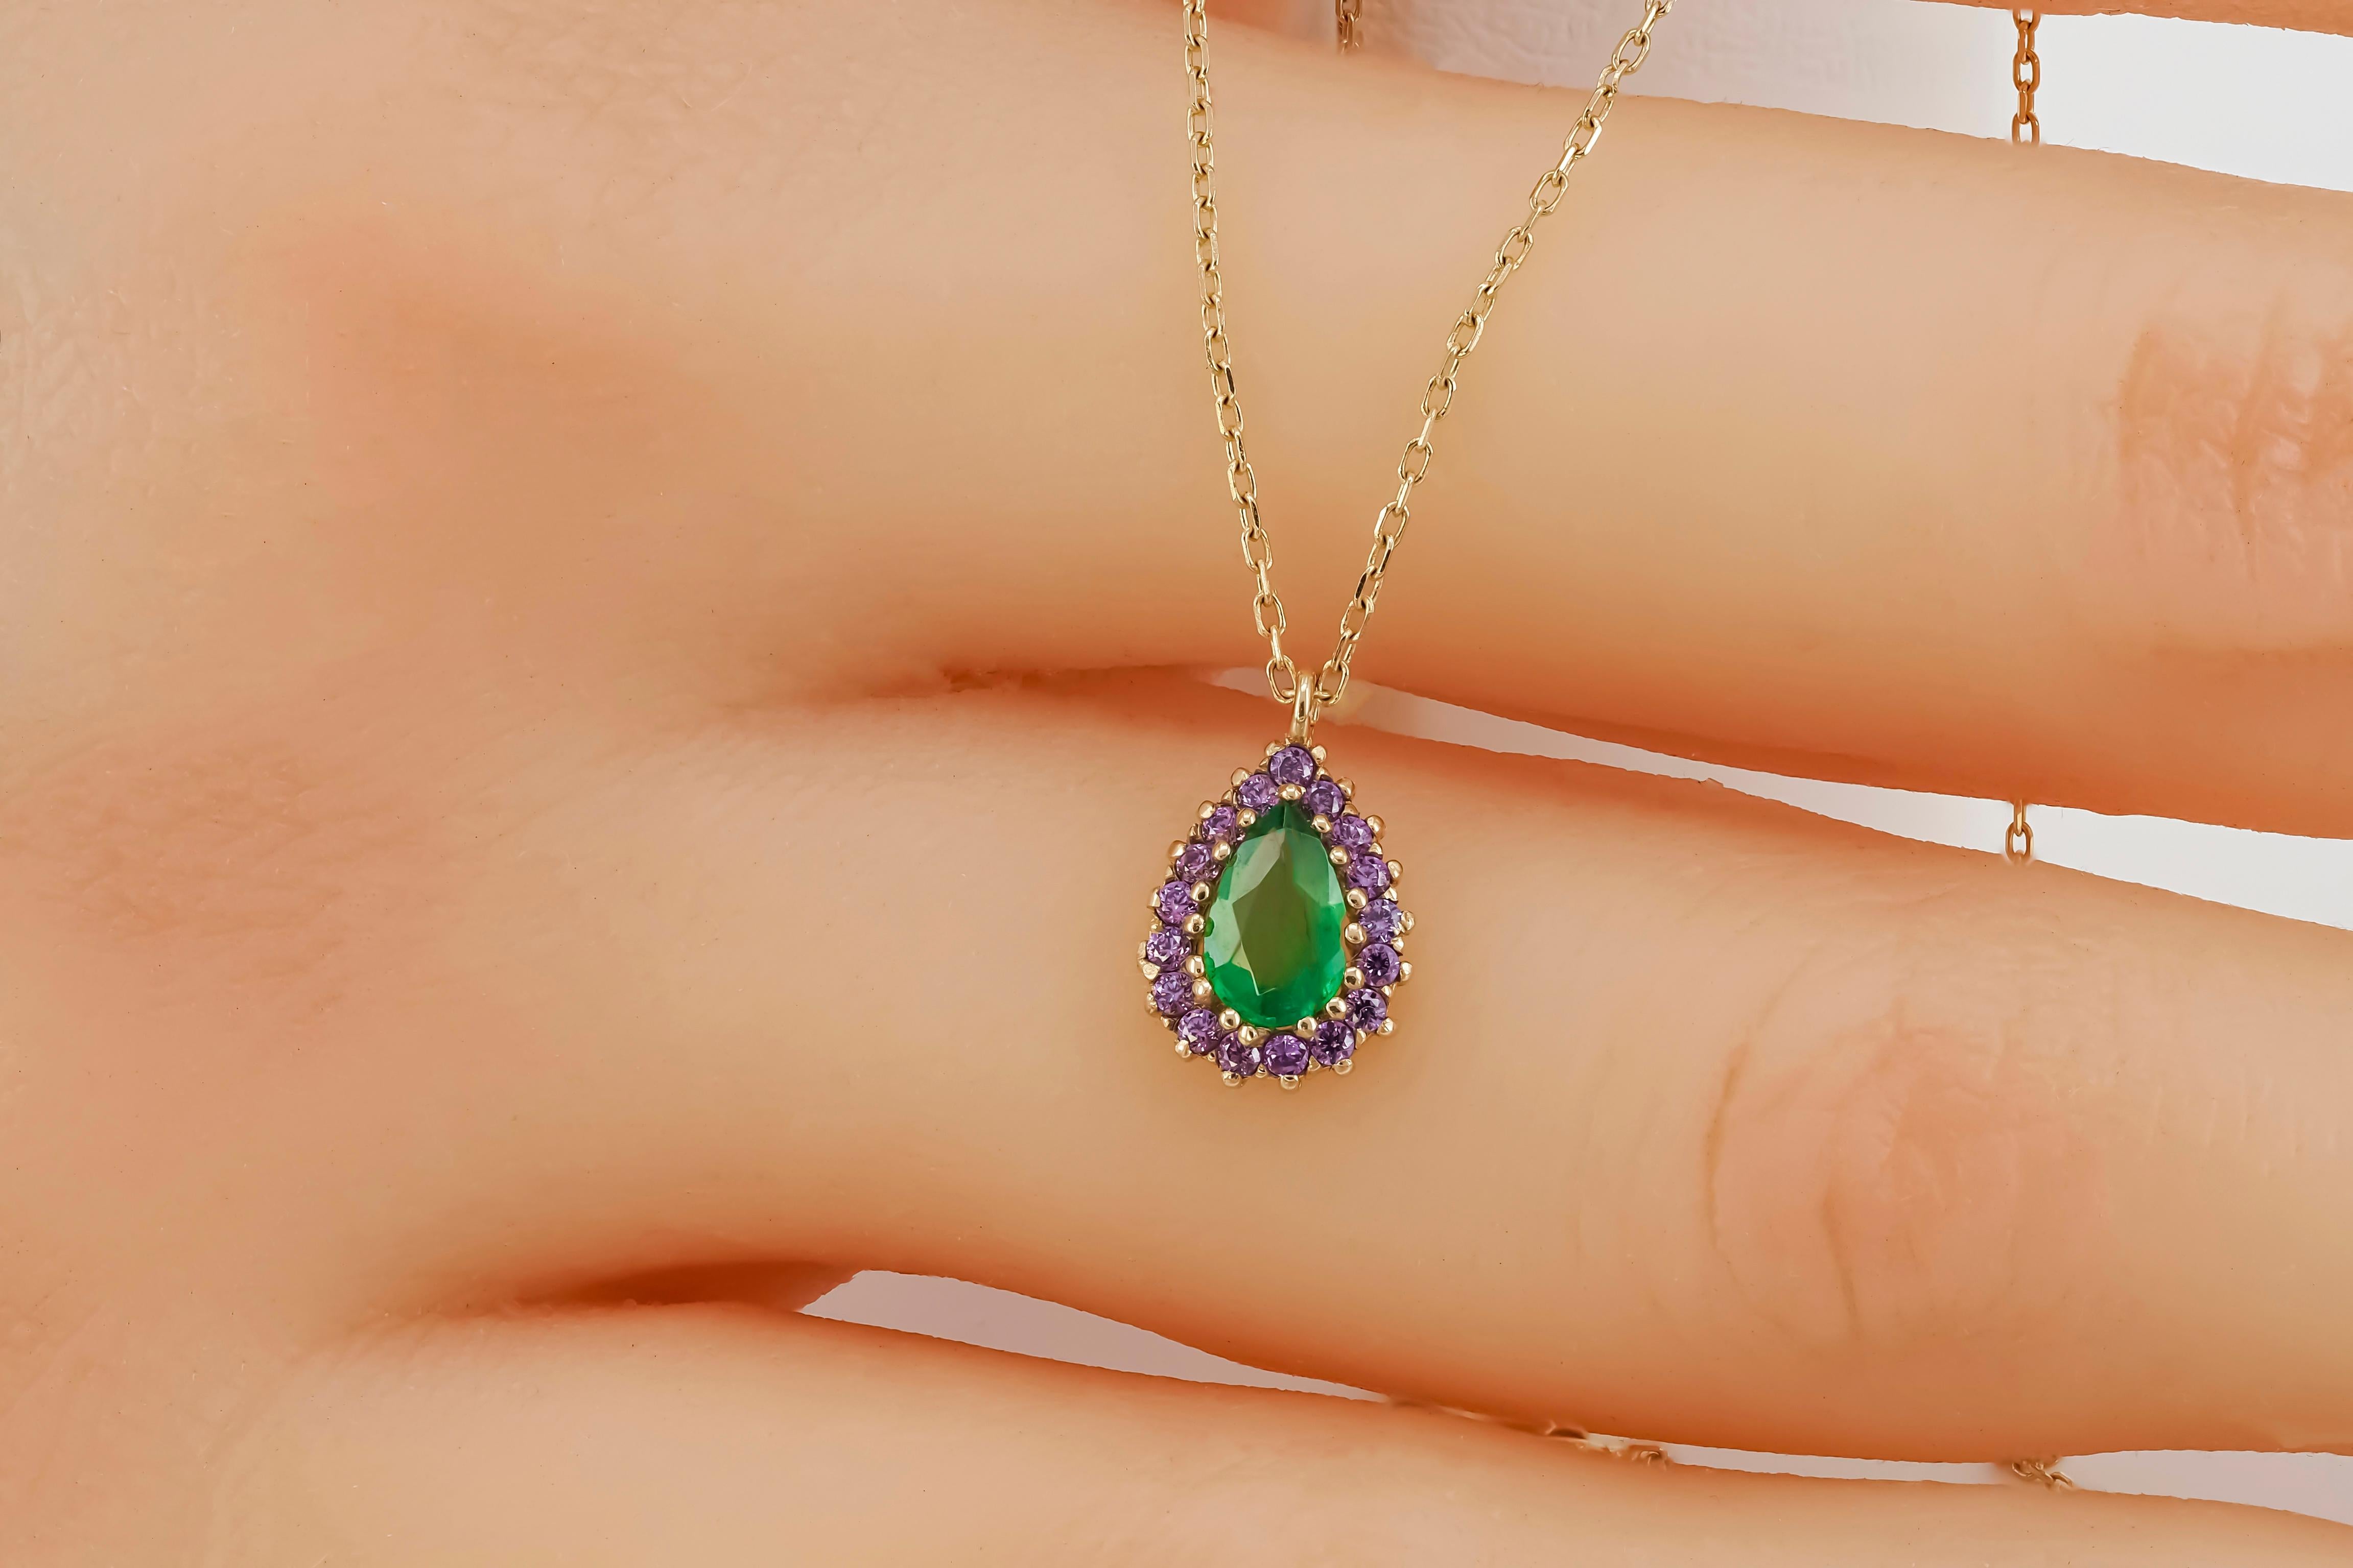 Emerald necklace pendant. 
Pear emerald necklace pendant. 14k gold necklace with emerald pendant. Tear drop emerald necklace.

Metal: 14k gold
Weight: 1.85 g.
Size: 
necklace: 45 sm
pendant:  11.5x7.5mm

Set with emerald, color - green
Pear cut,